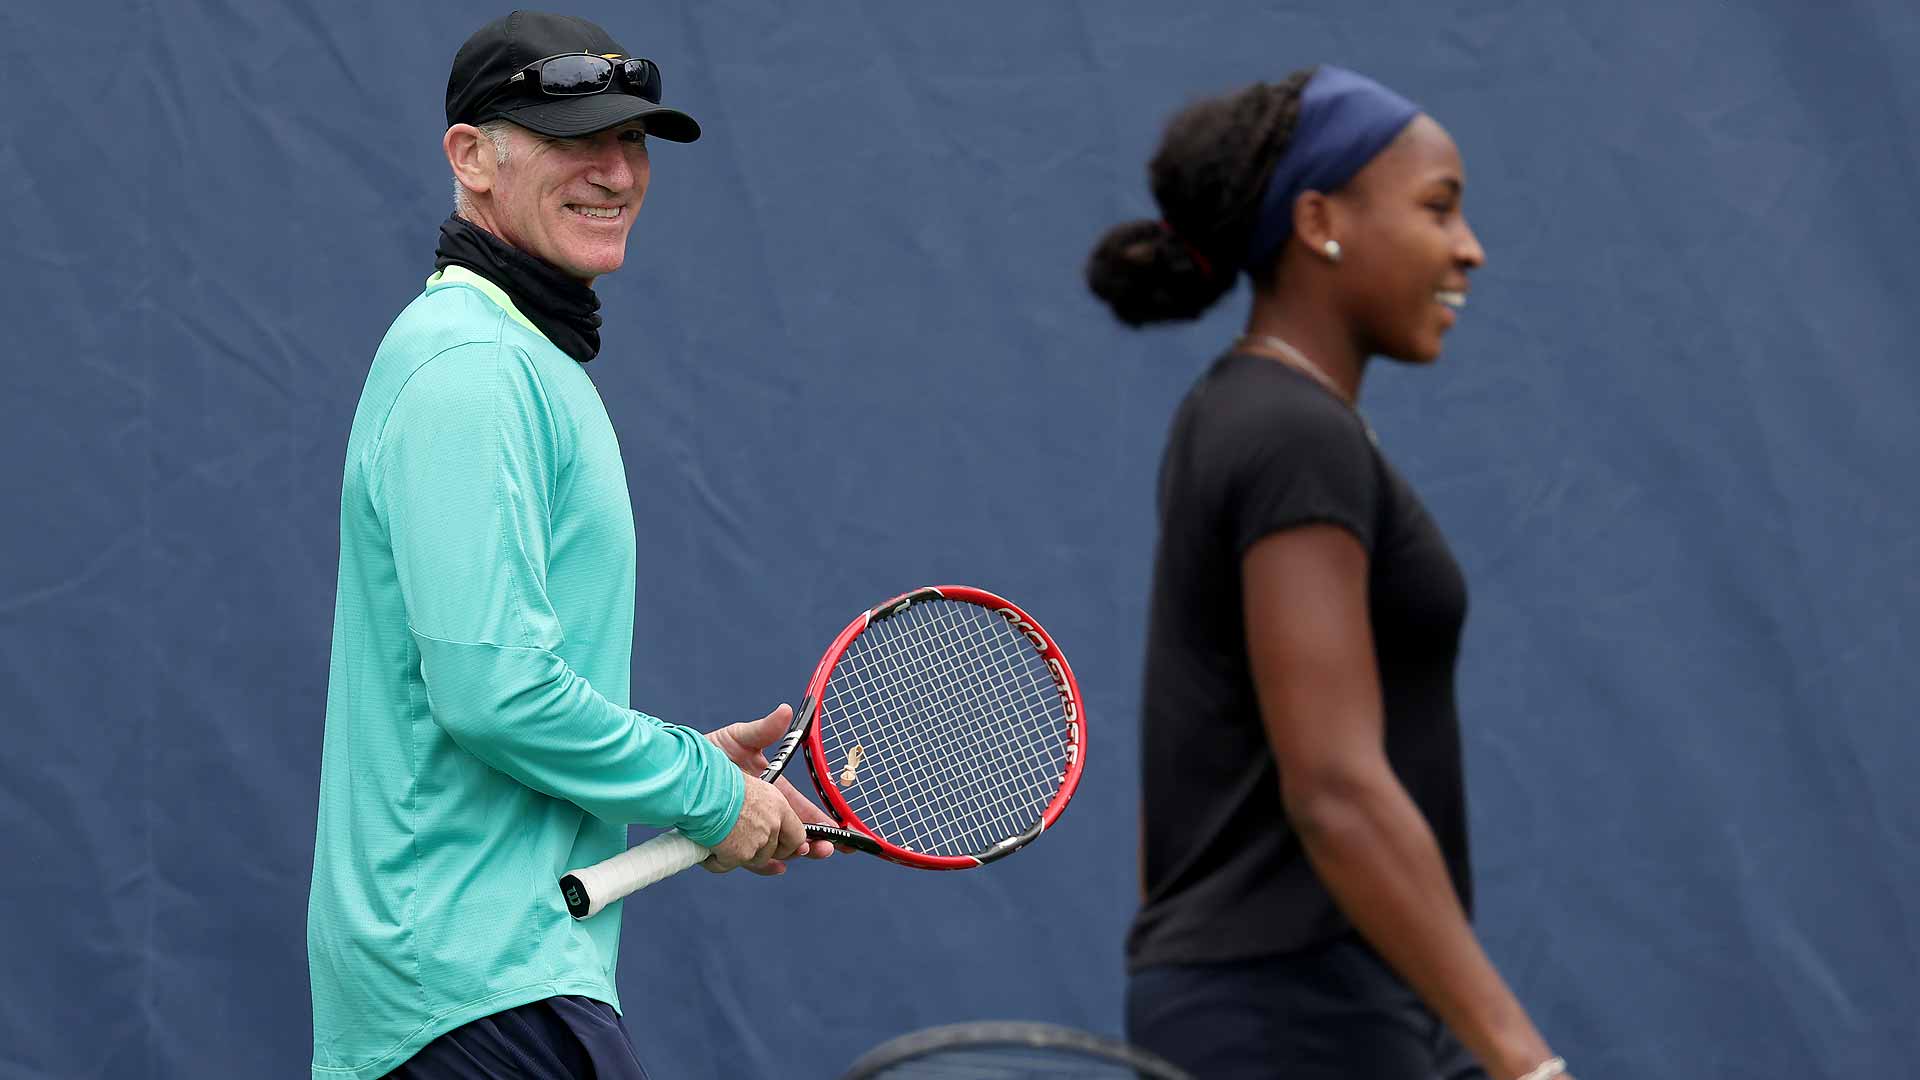 Brad Gilbert coaching Coco Gauff at the US Open.